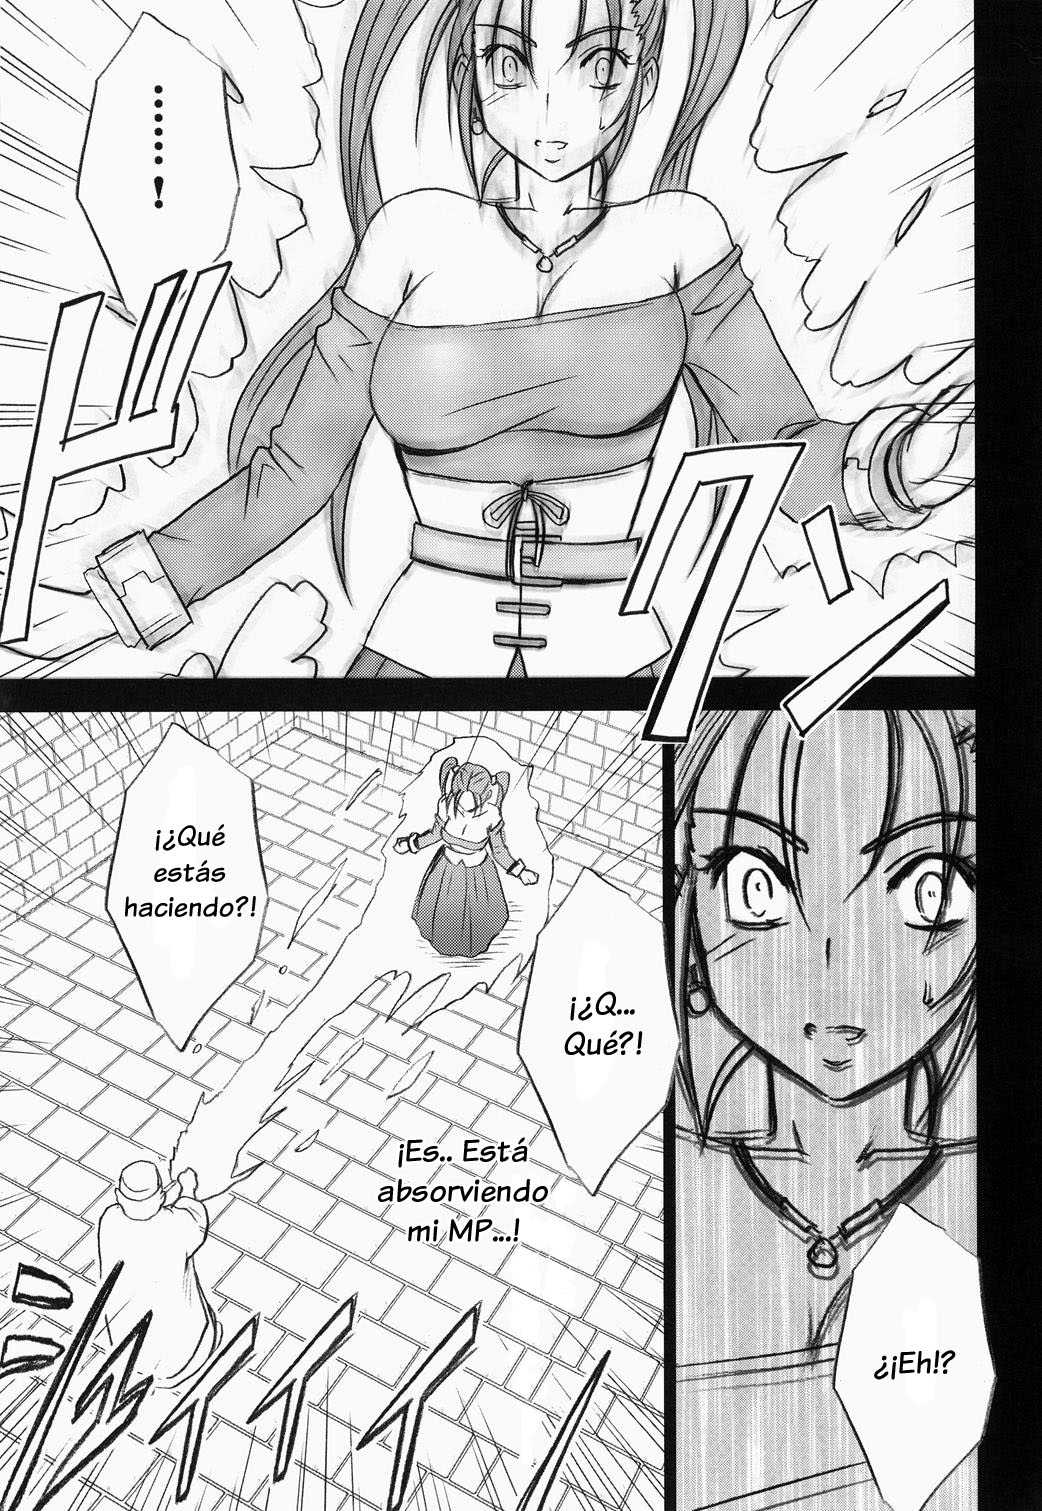 [Crimson Comics (Carmine)] Jessica Da | La caída de Jessica (Dragon Quest VIII) [Spanish/Español] 